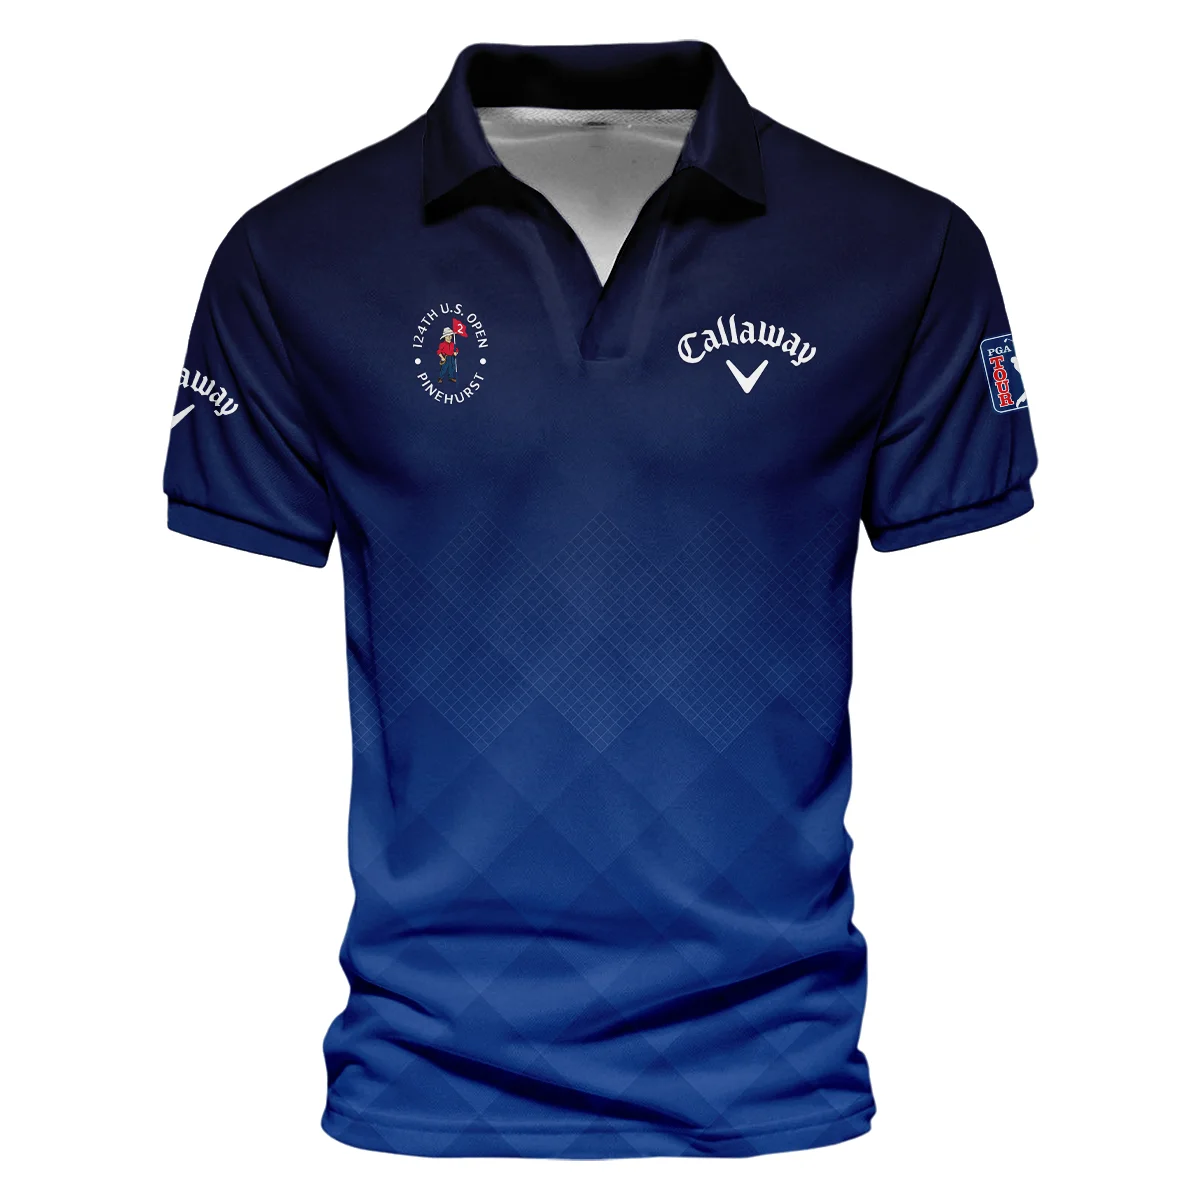 124th U.S. Open Pinehurst Callaway Dark Blue Gradient Stripes Pattern Polo Shirt Style Classic Polo Shirt For Men